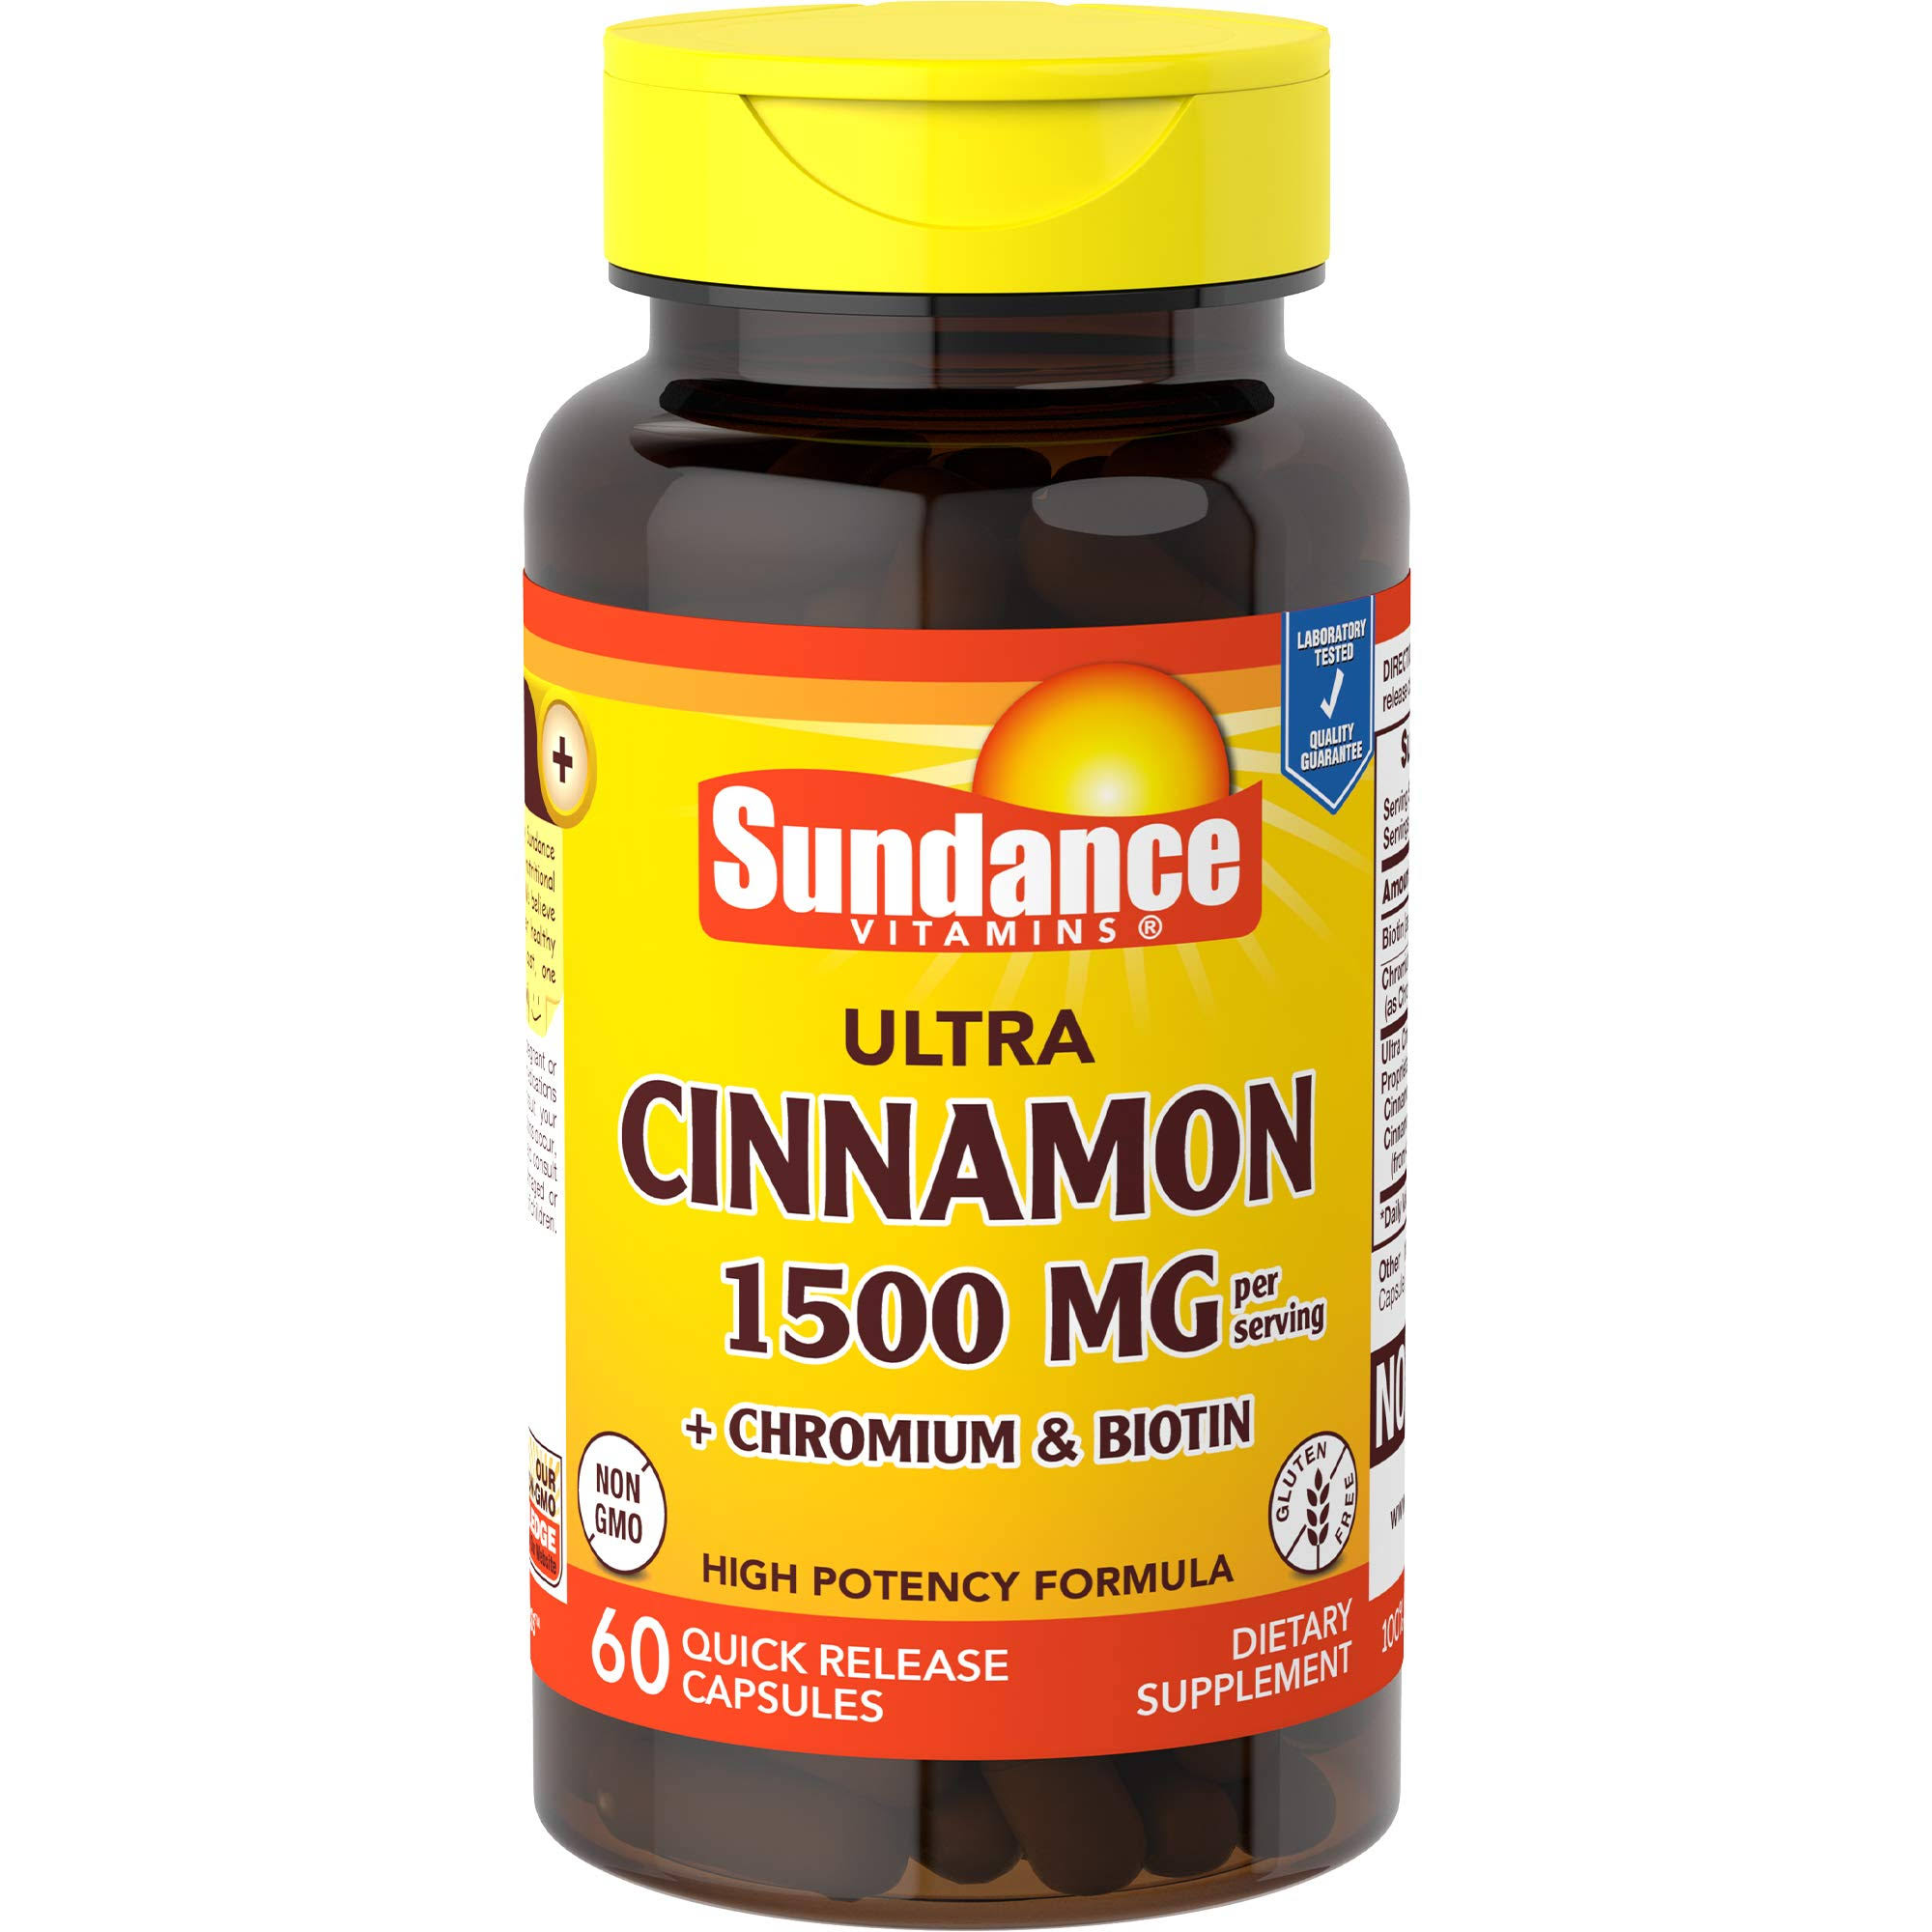 Sundance Cinnamon with Biotin and Chromium Supplement Tablets - 60ct